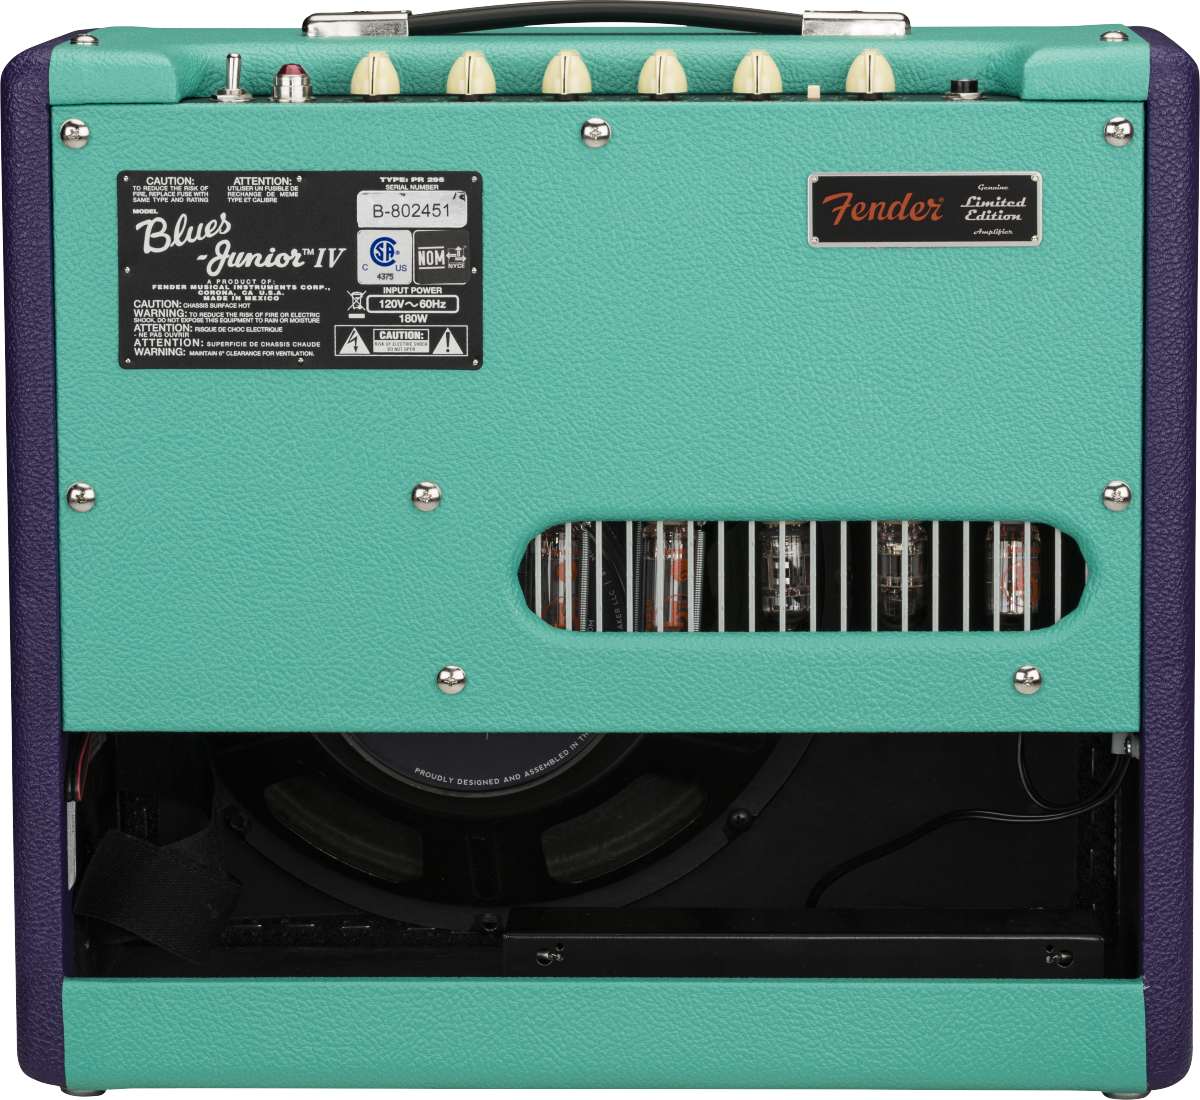 Fender Blues Junior Iv Fsr Ltd 15w 1x12 Jensen Cannabis Rex Purple Seafoam - Combo voor elektrische gitaar - Variation 1